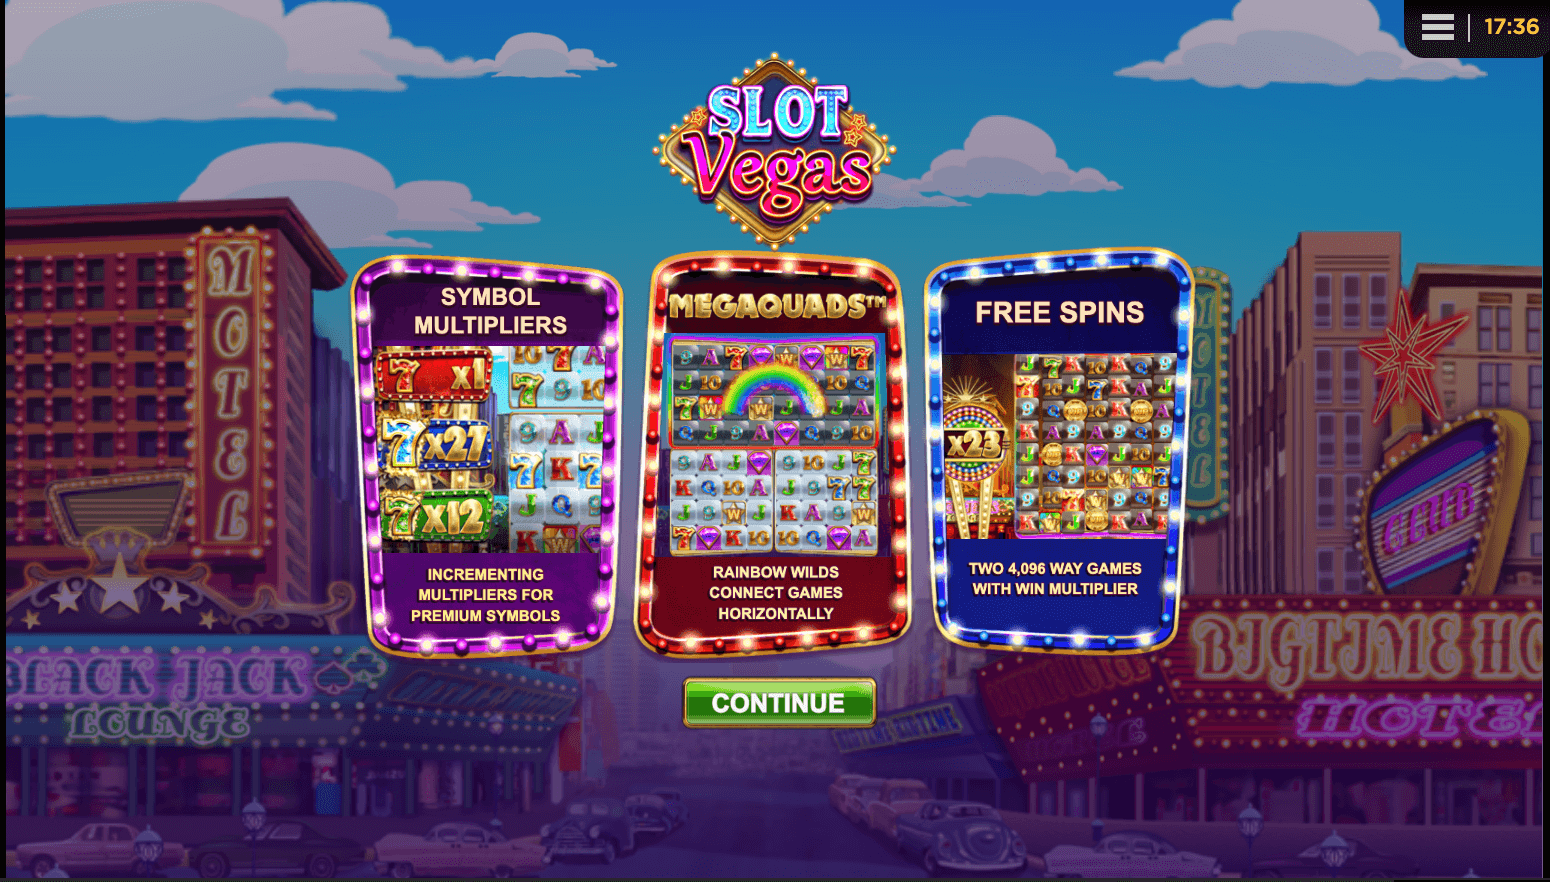 Slot Vegas Megaquads Proces gry